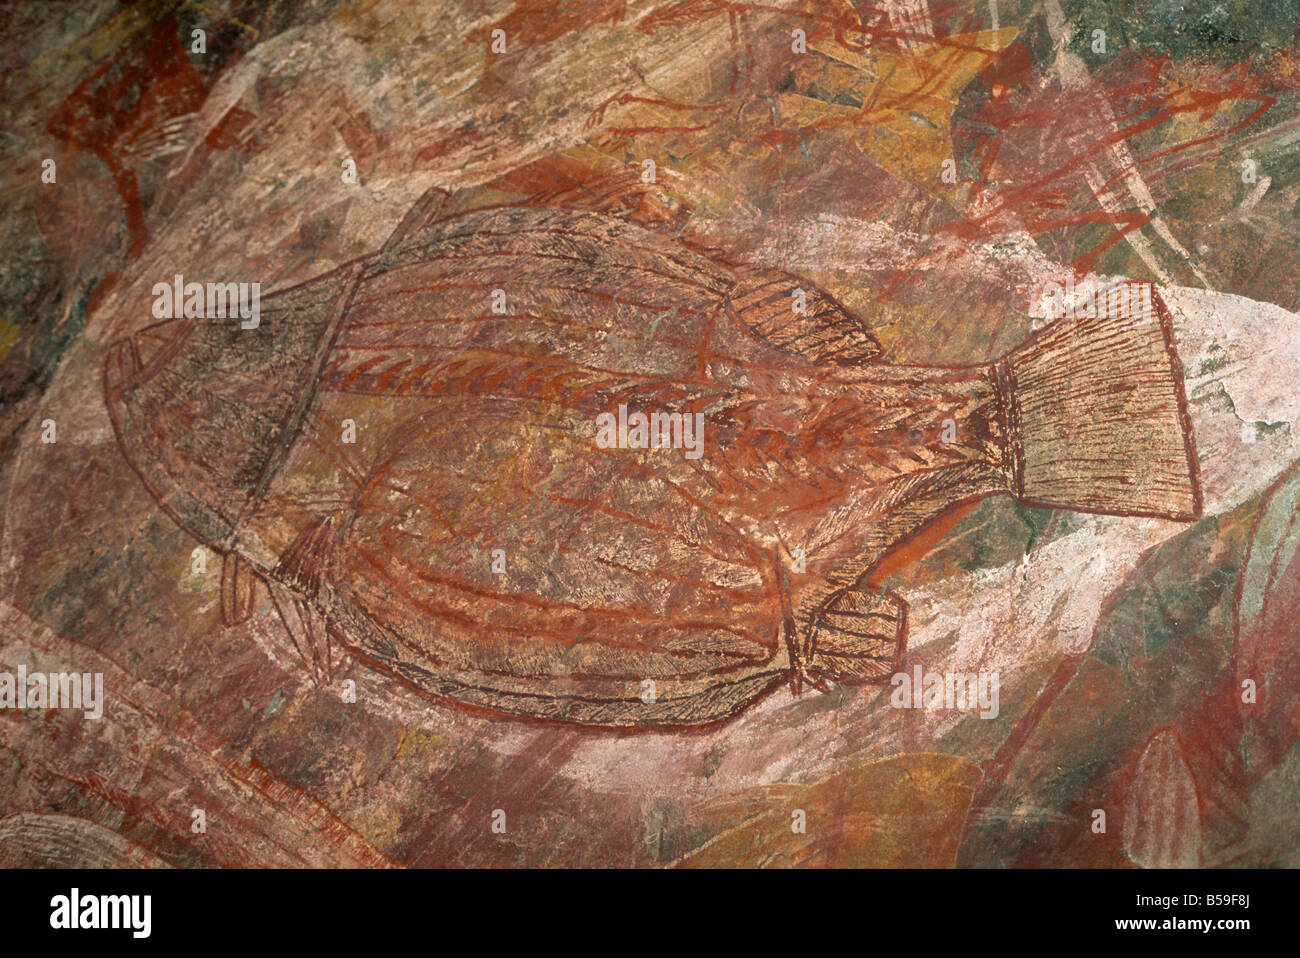 X-ray style fish at the Aboriginal rock art site at Ubirr Rock, Kakadu National Park, Northern Territory, Australia Stock Photo